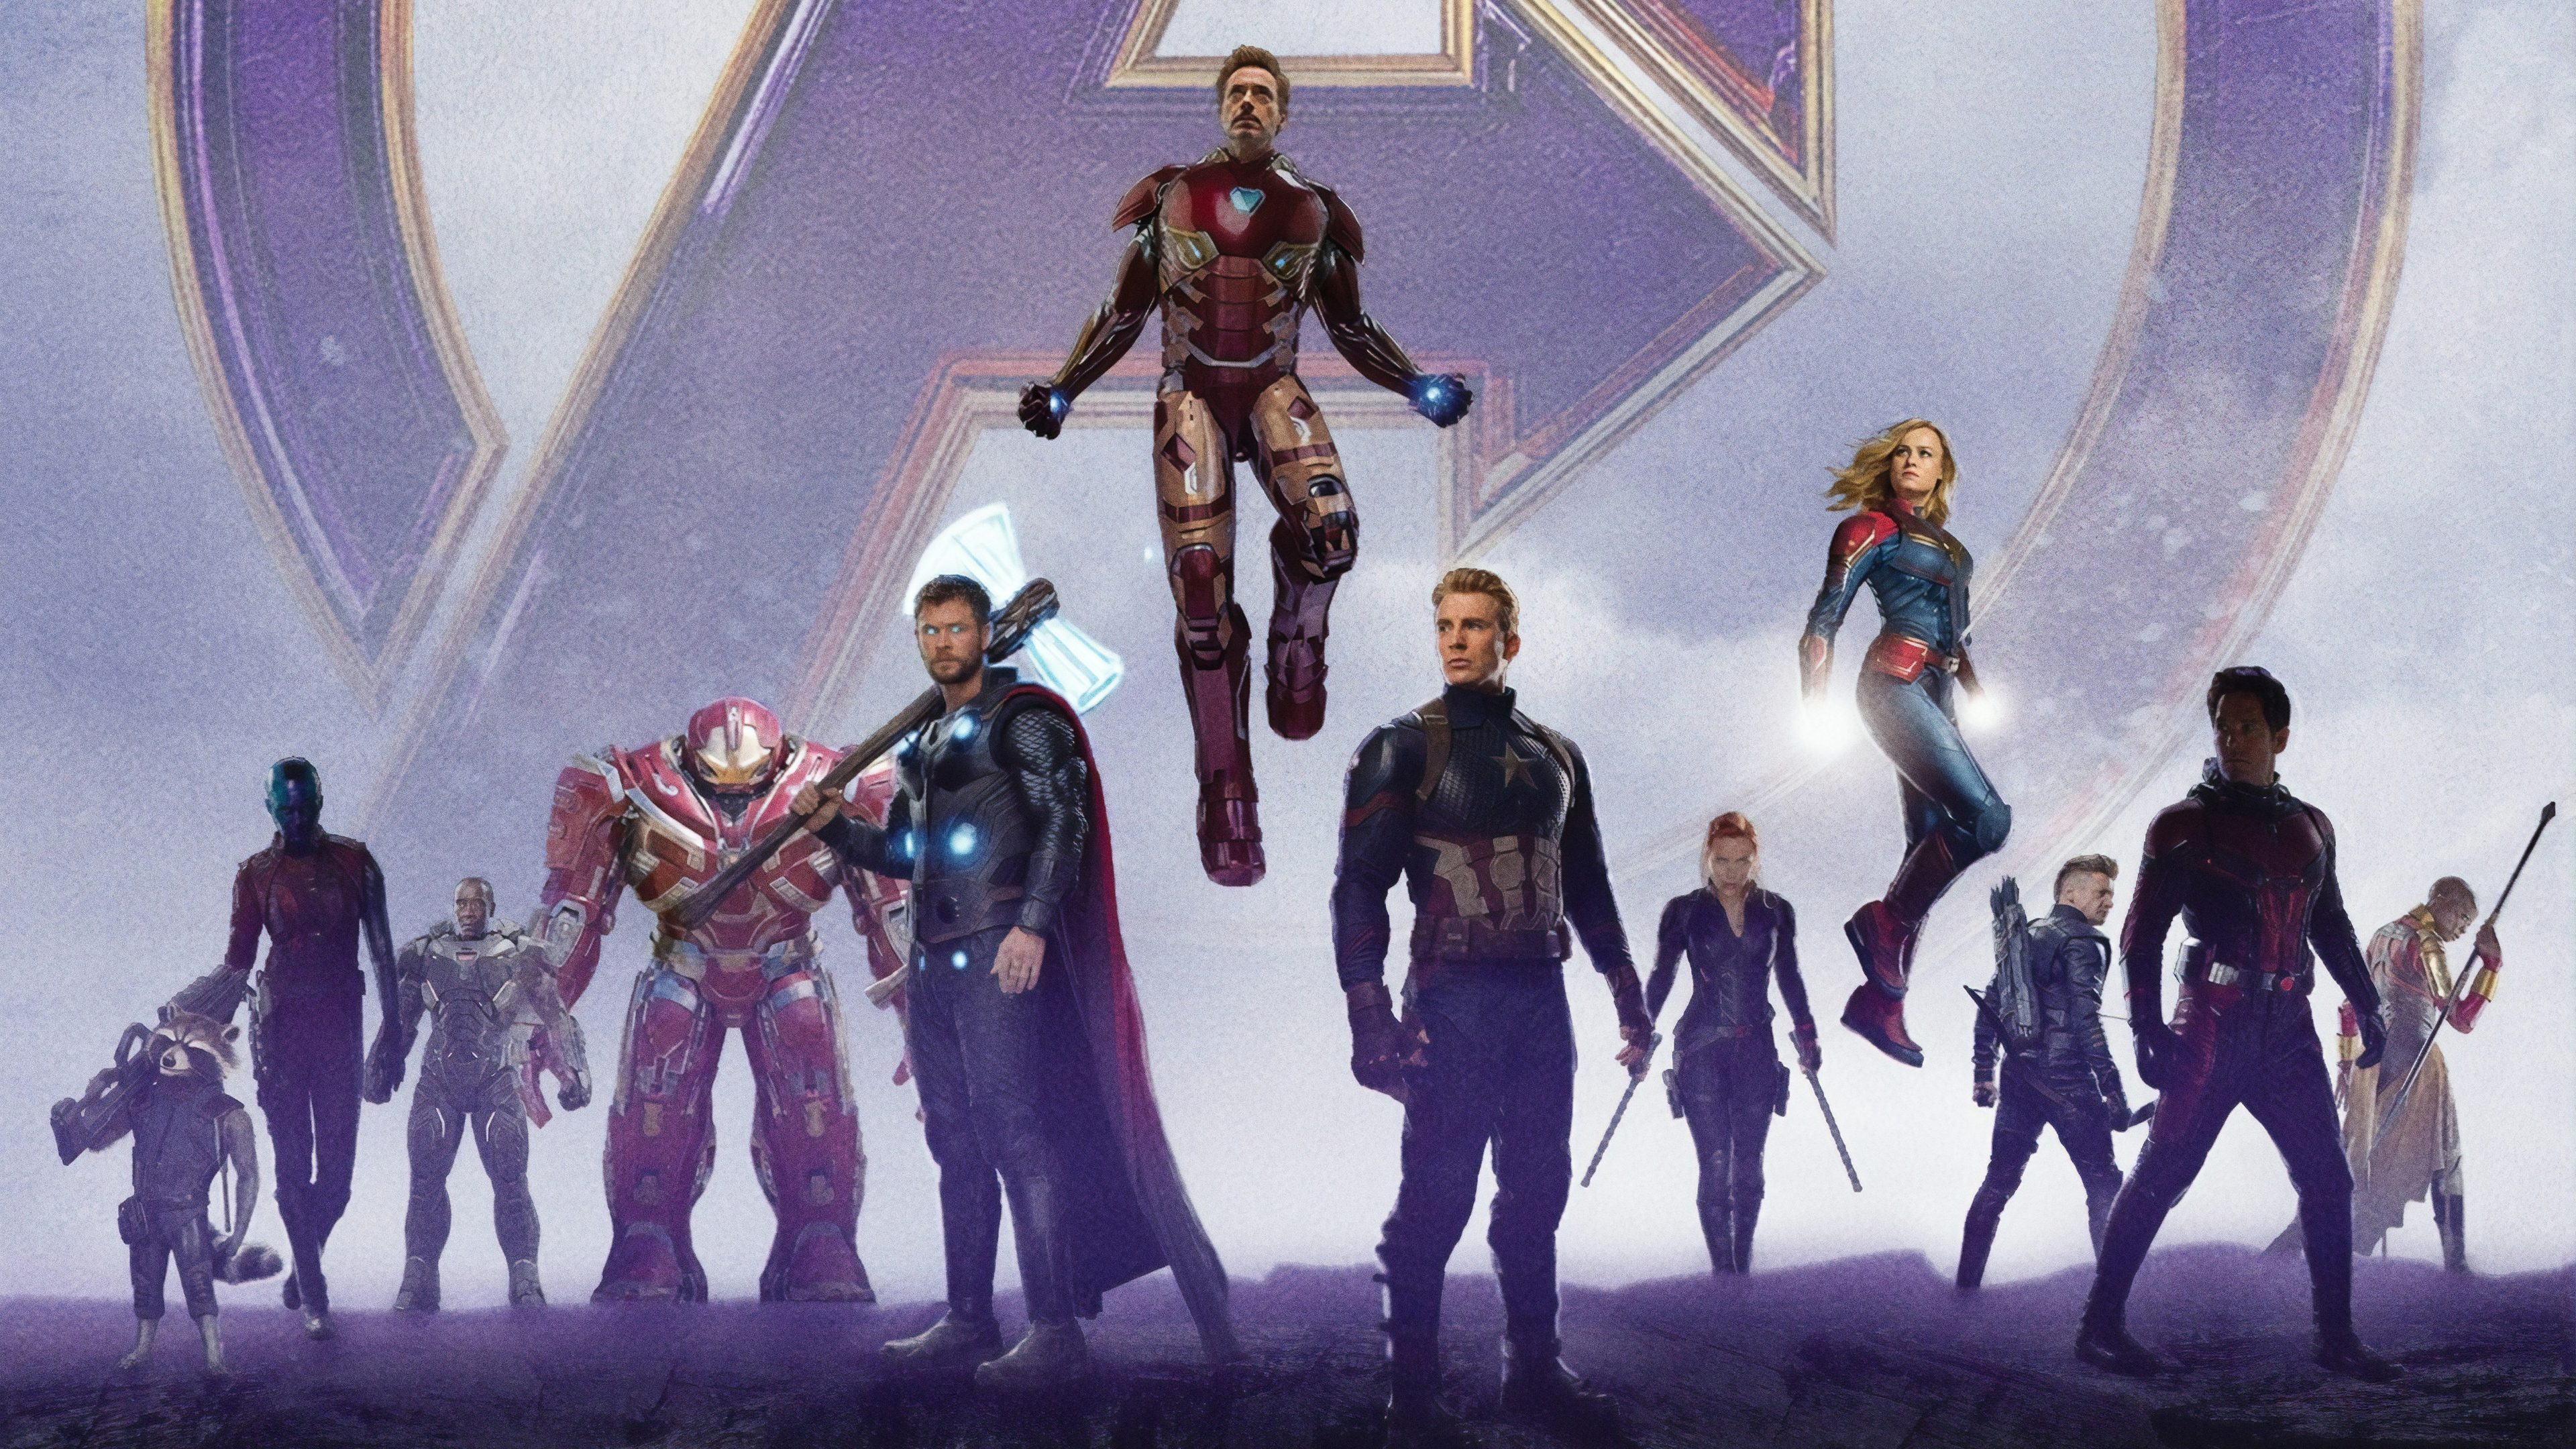 Avengers Endgame Poster Image Wallpapers